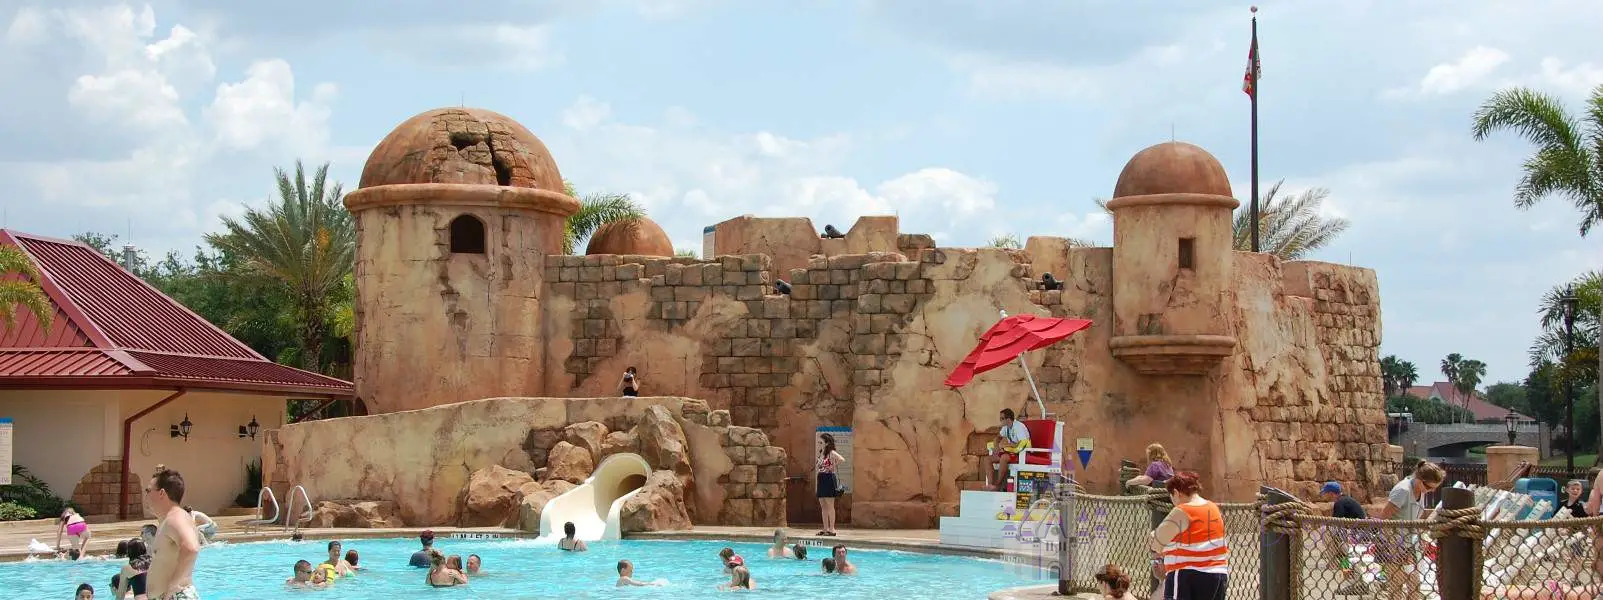 Il Caribbean Beach Resort porta i Caraibi a Disney!